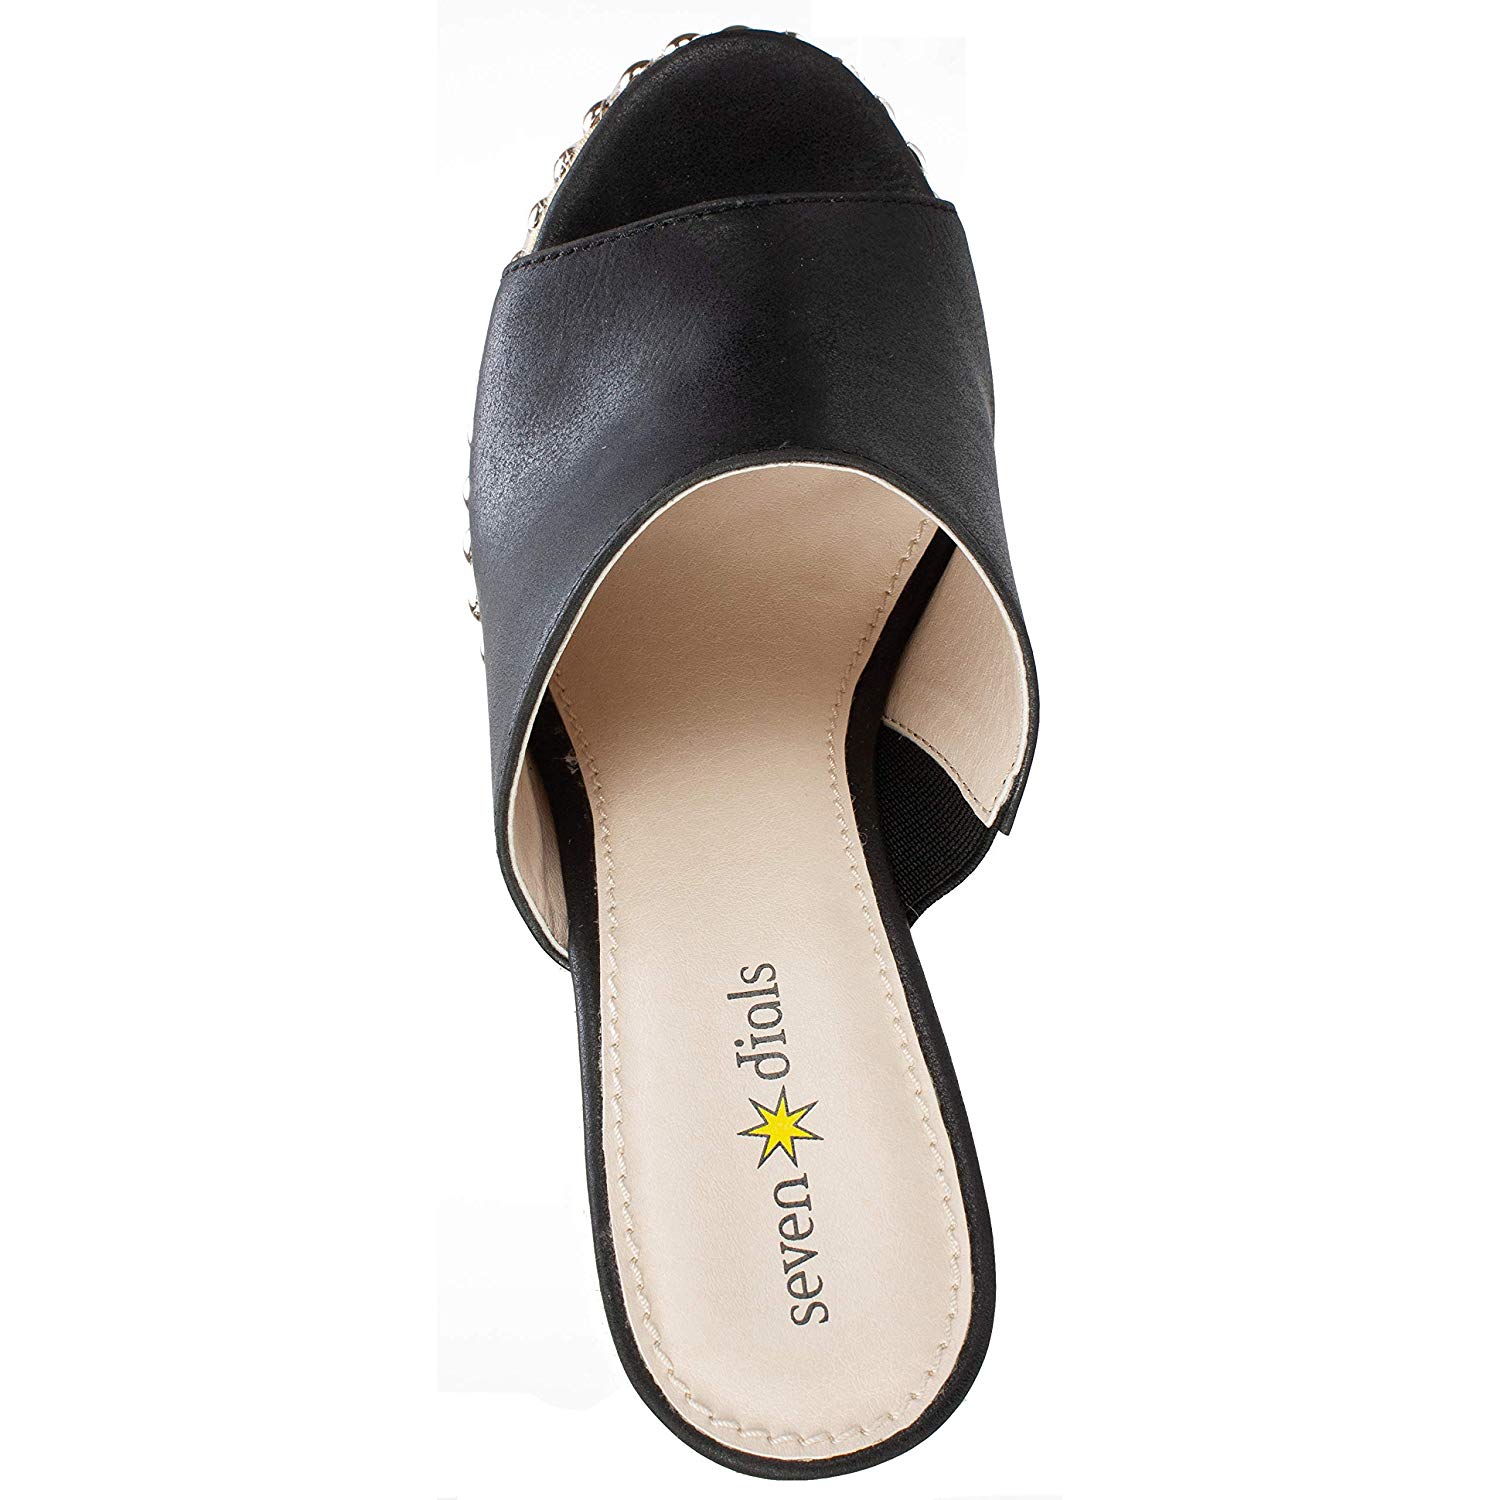 SEVEN DIALS Shoes Shania Women's Sandal, Black, Size 8.0 qquK | eBay